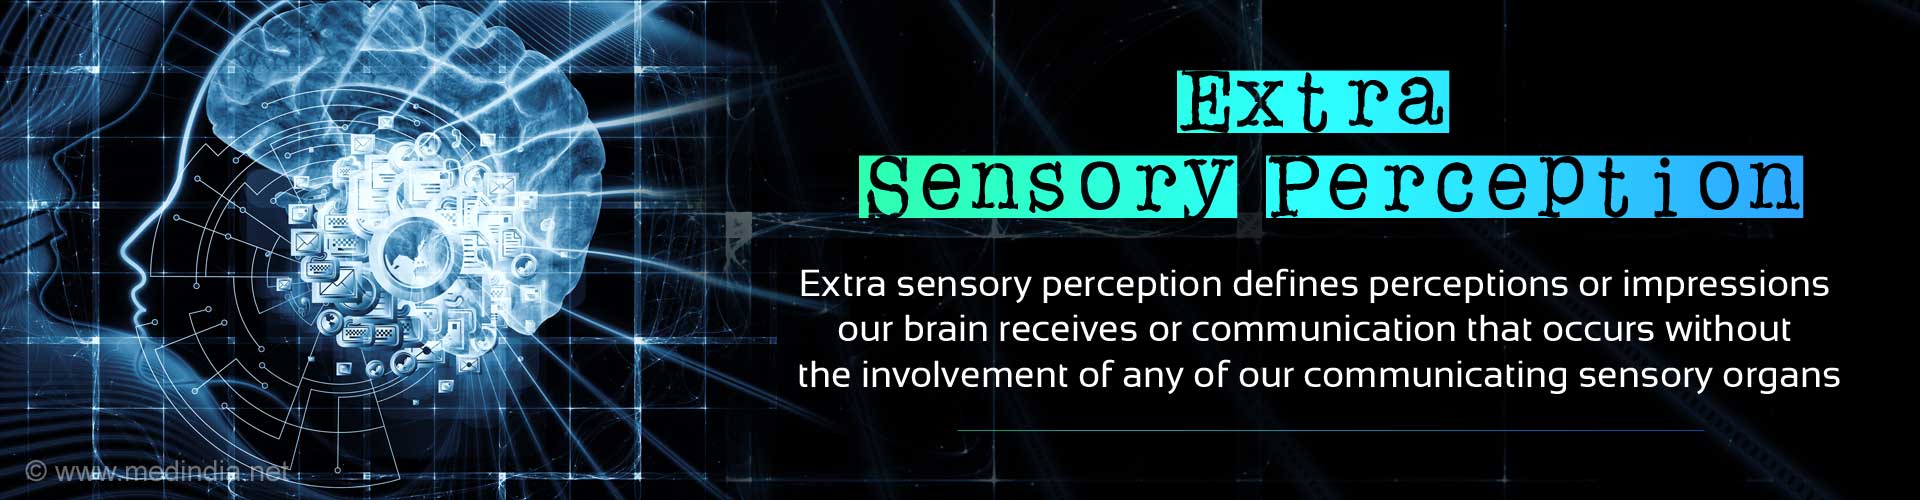 Extra Sensory Perception
